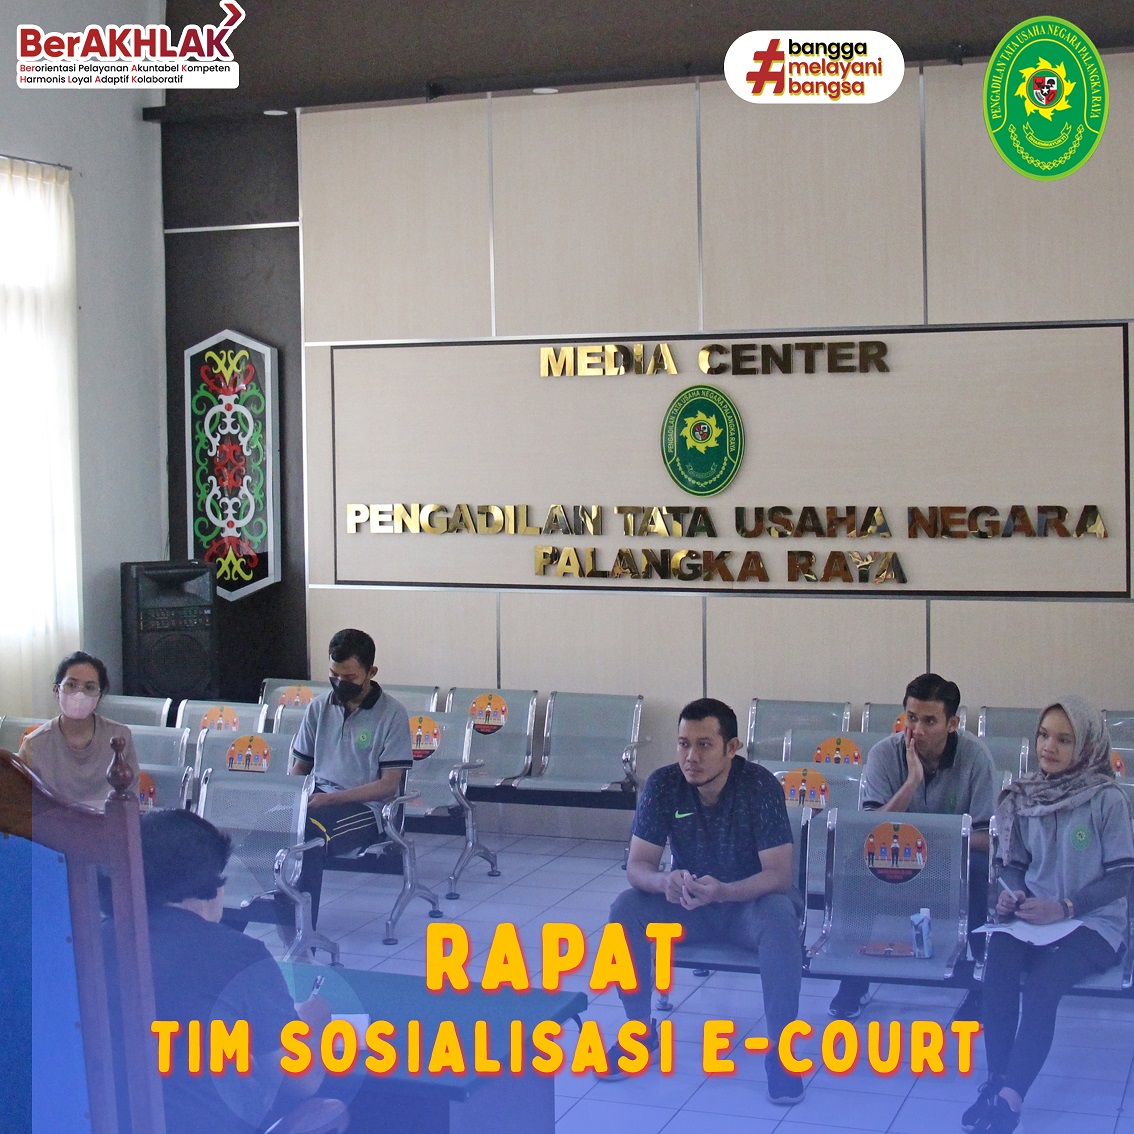 Rapat Tim Sosialisasi E-Court